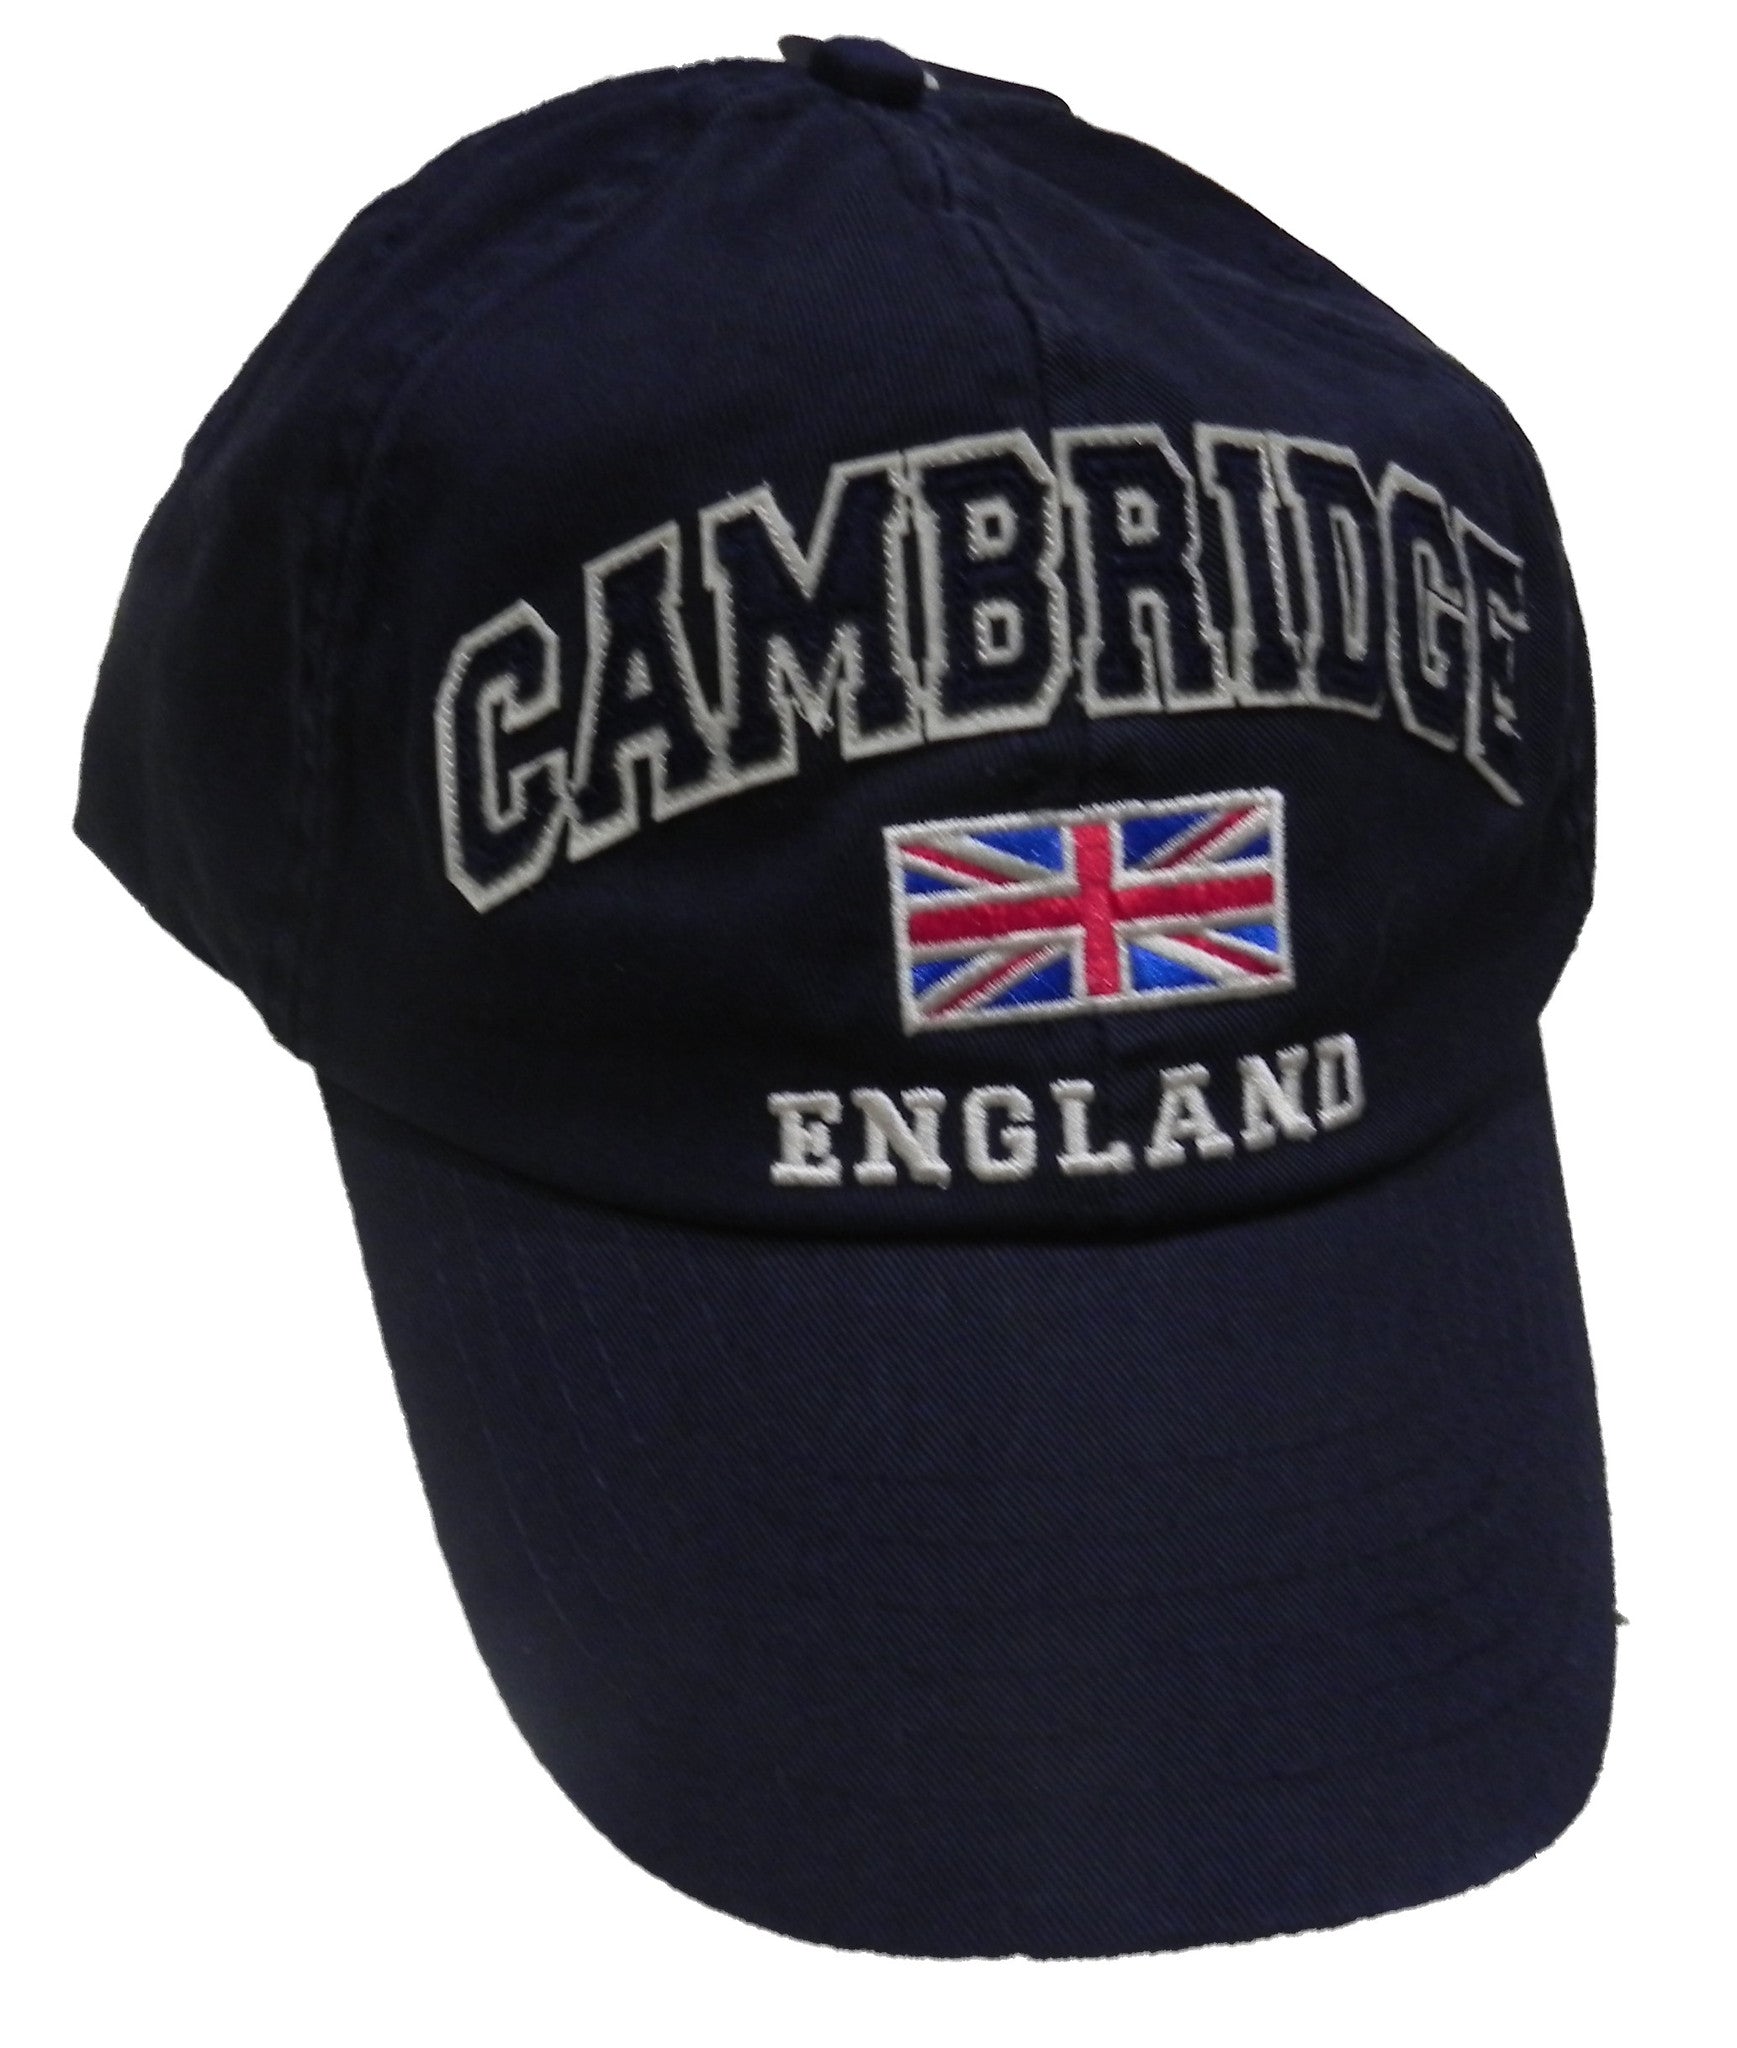 Cambridge England Cap - Adjustable Cap with Union Jack and Cambridge Applique Writing